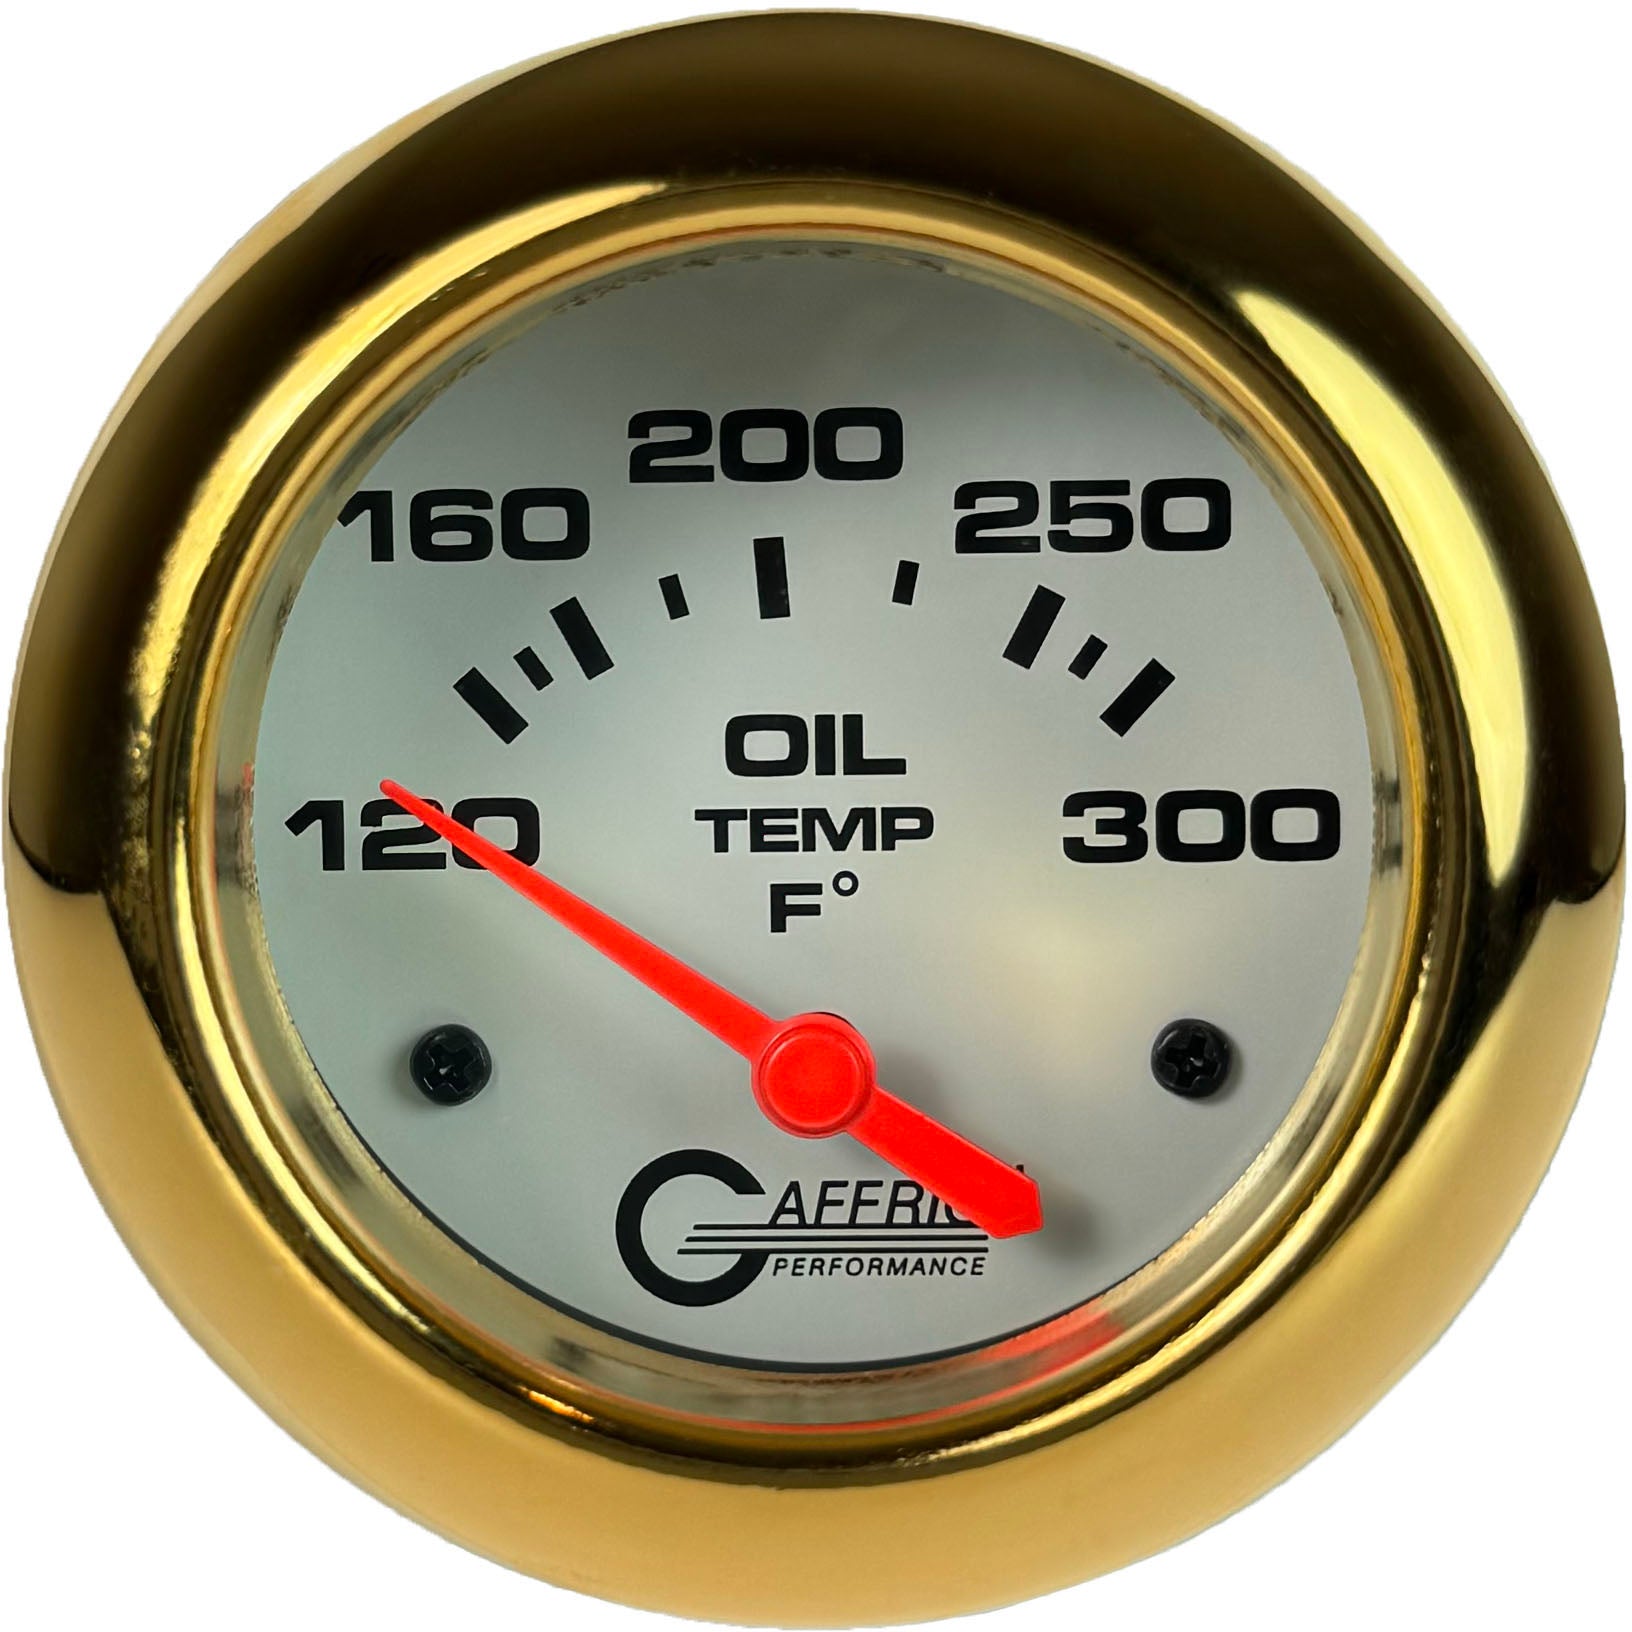 GAFFRIG PART #13003 2 5/8 INCH ELECTRIC OIL TEMP GAUGE 100-300 F - INCLUDES SENDER & BUSHING KIT WHITE GOLD